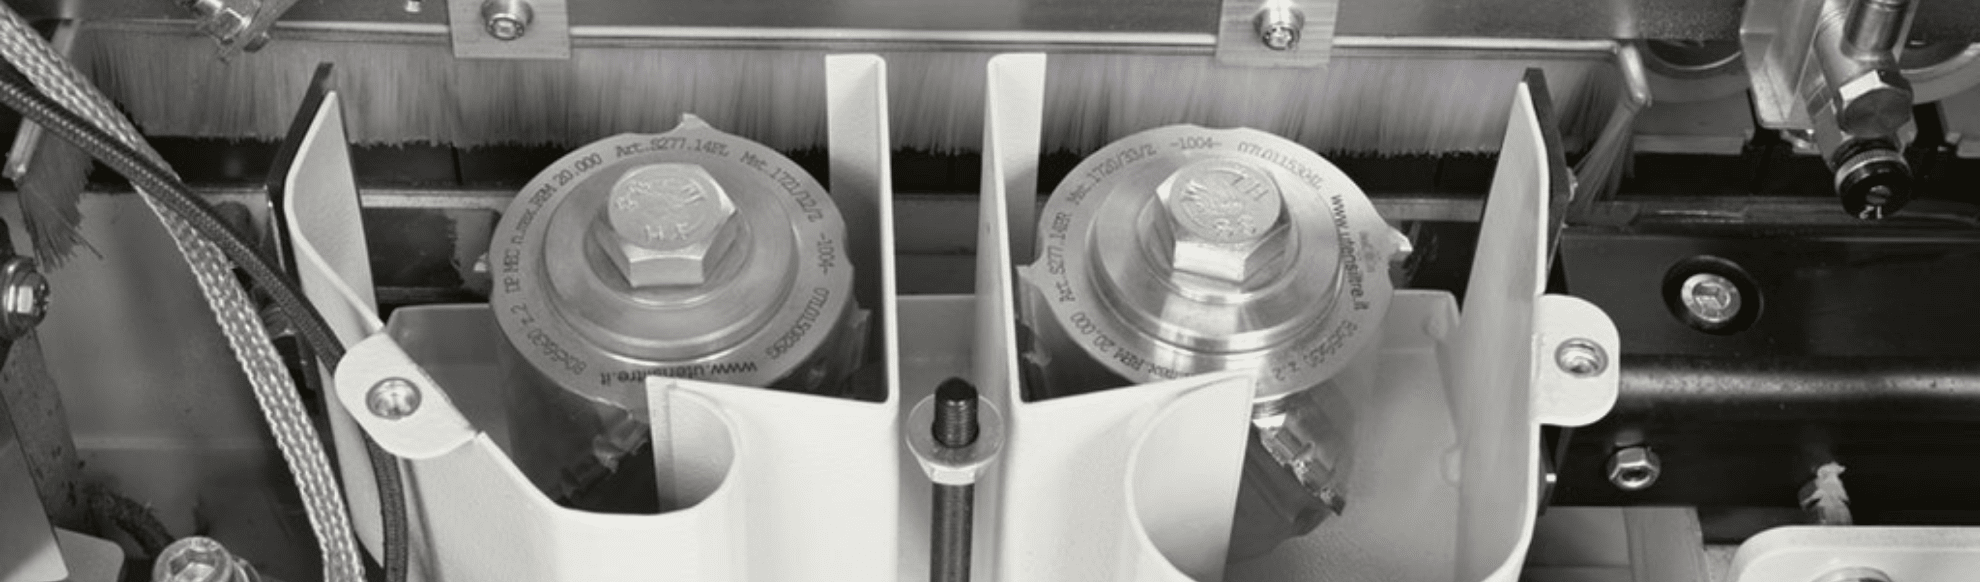 A black and white image of internal edgebander hardware